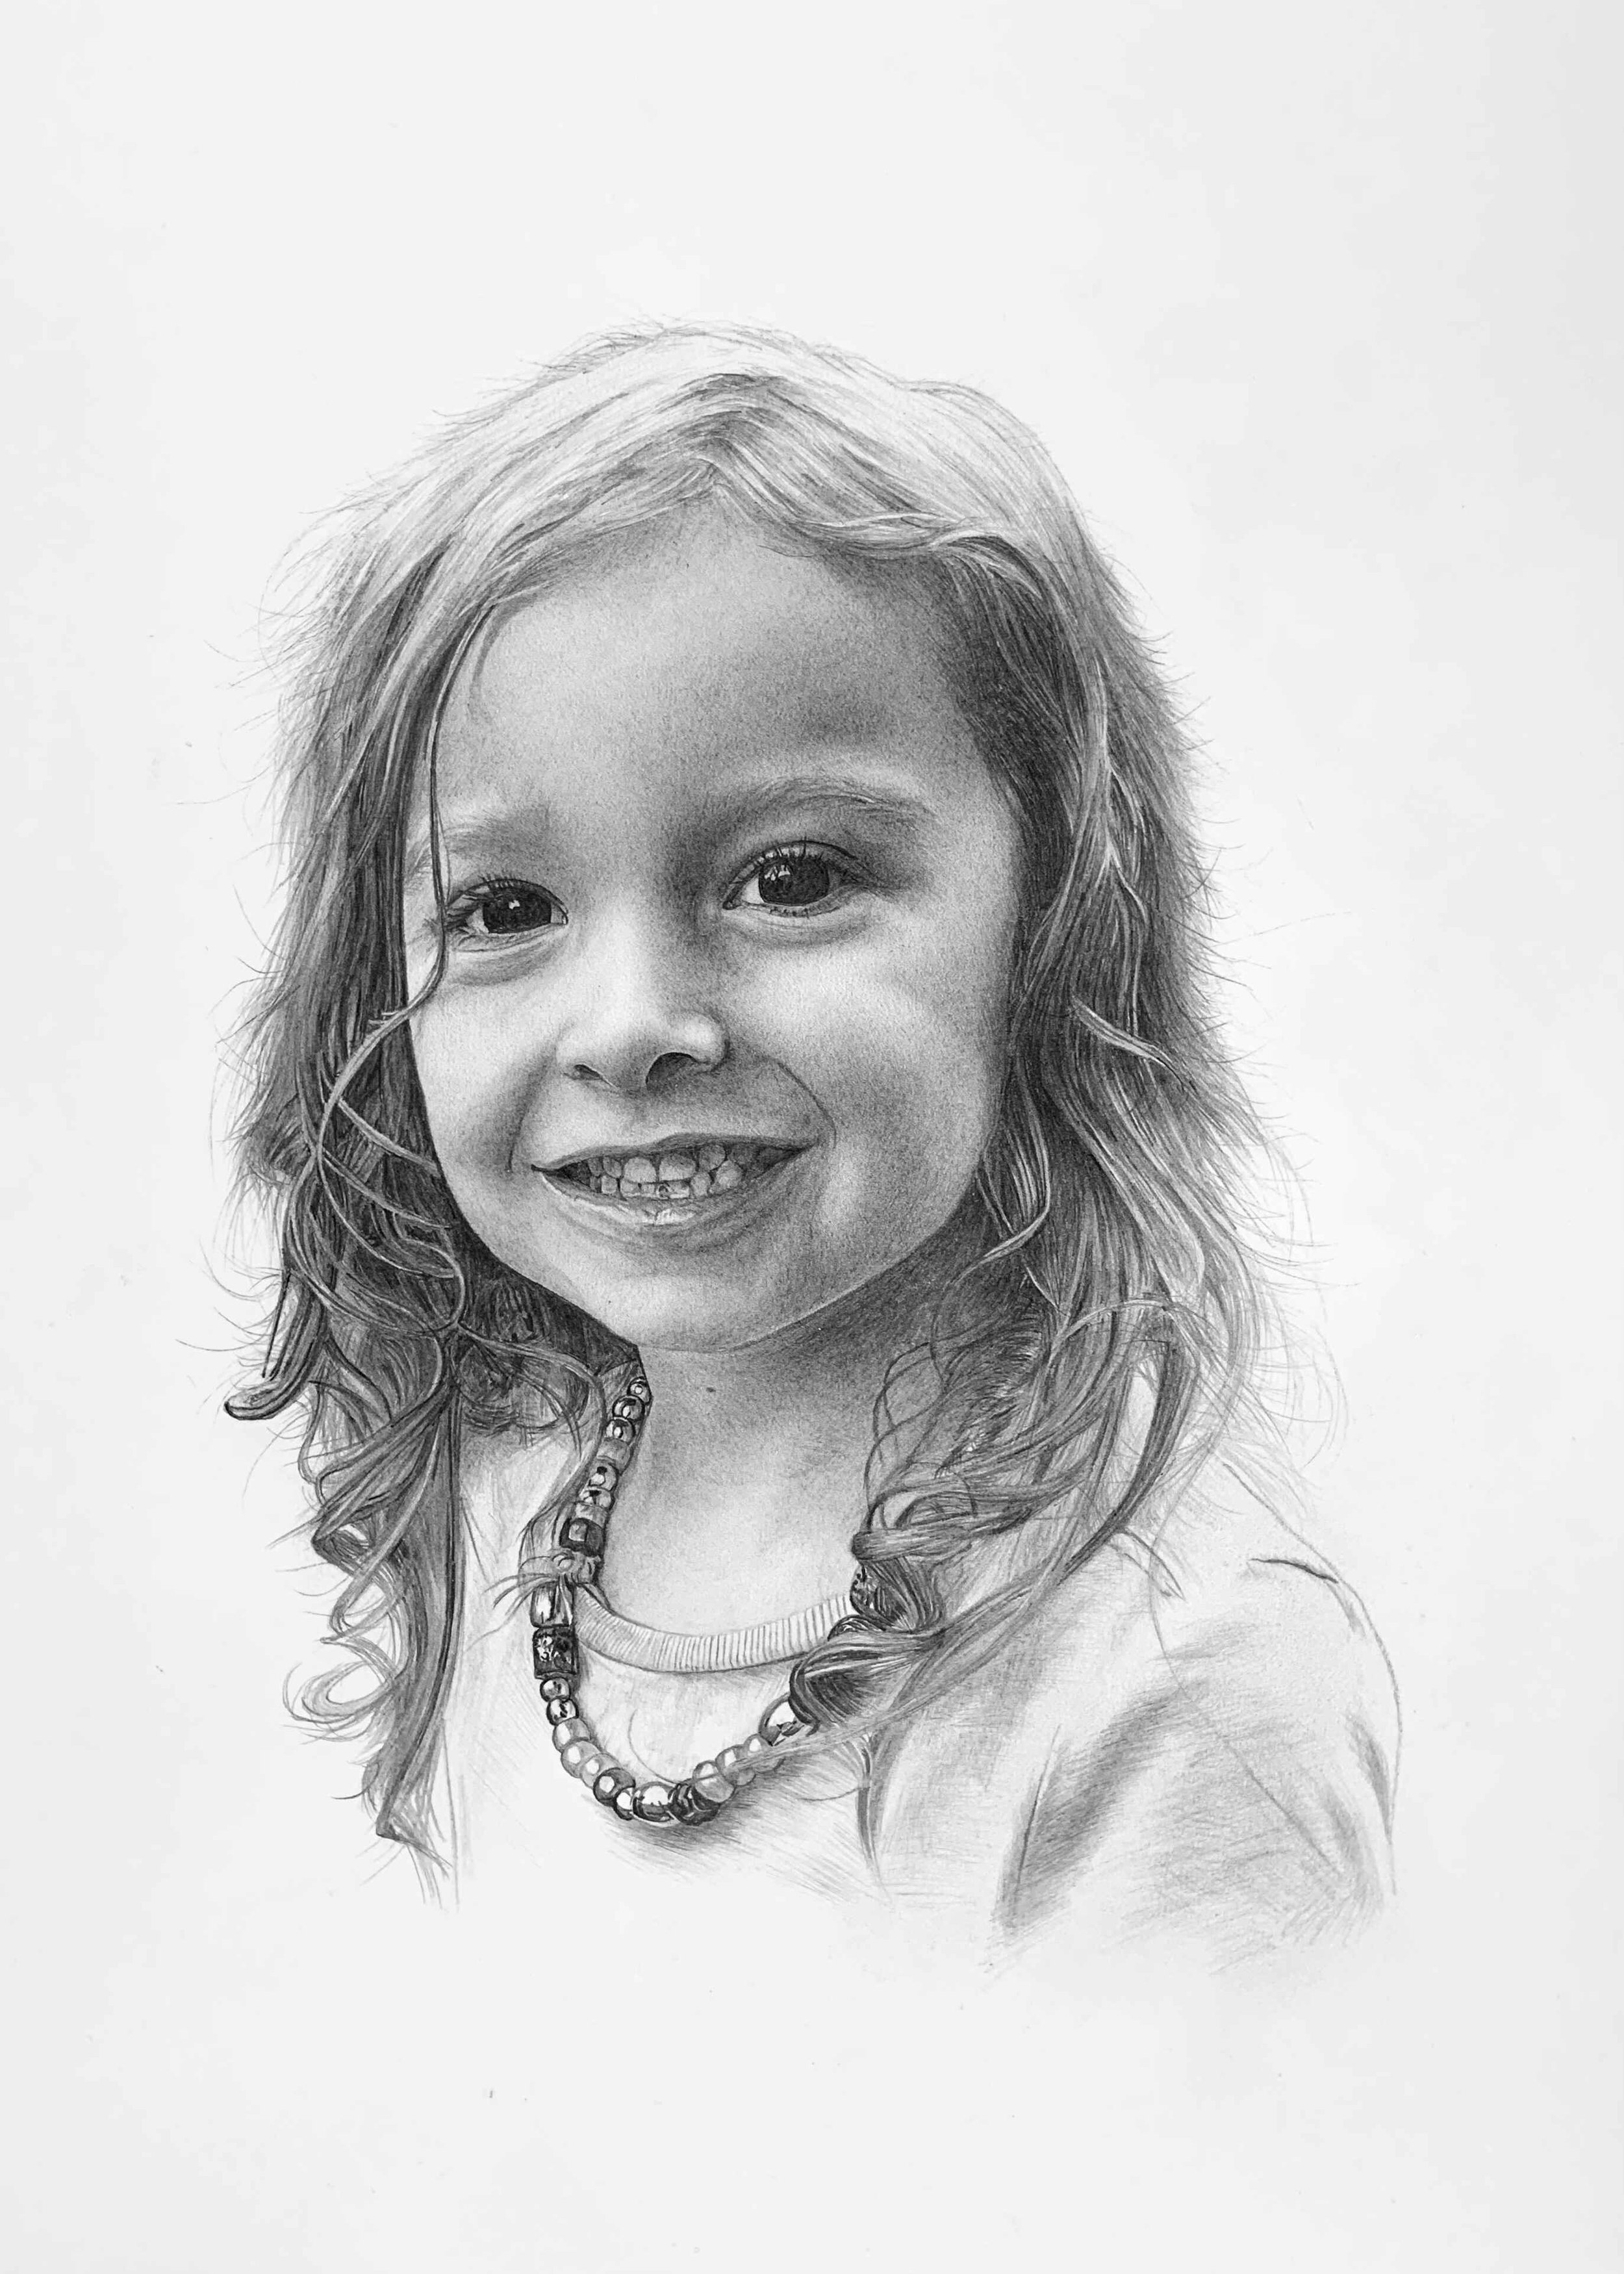 Hand Drawn Pencil Portrait of Girl